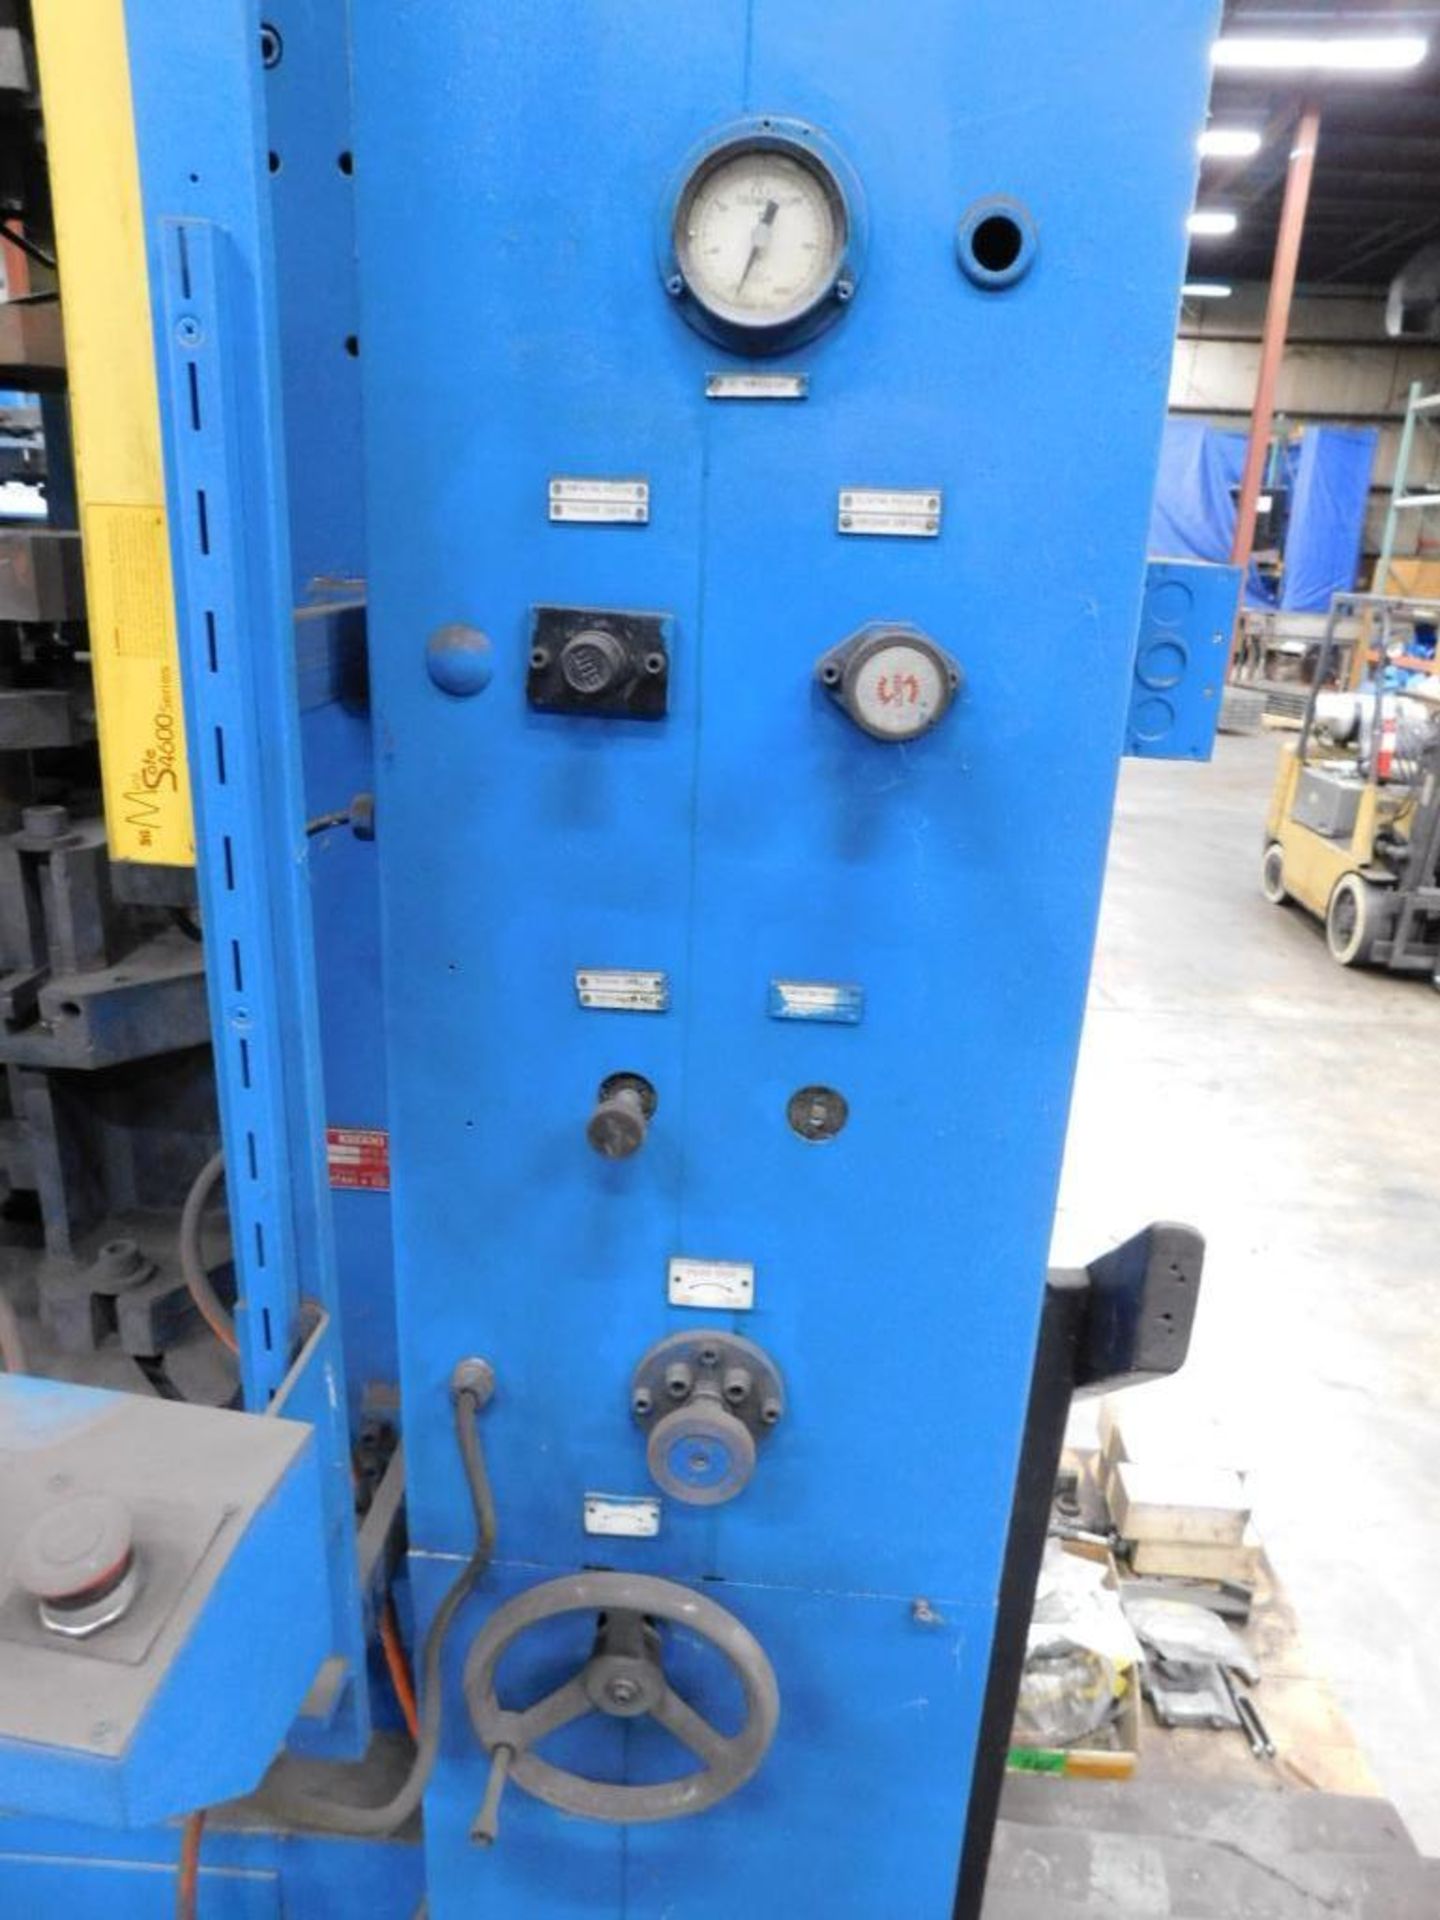 Kotaki Powder Compacting Press, Hydraulic, Model KPH-100, S/N: 2123, 100 Ton Maximum Pressing Force, - Image 19 of 27